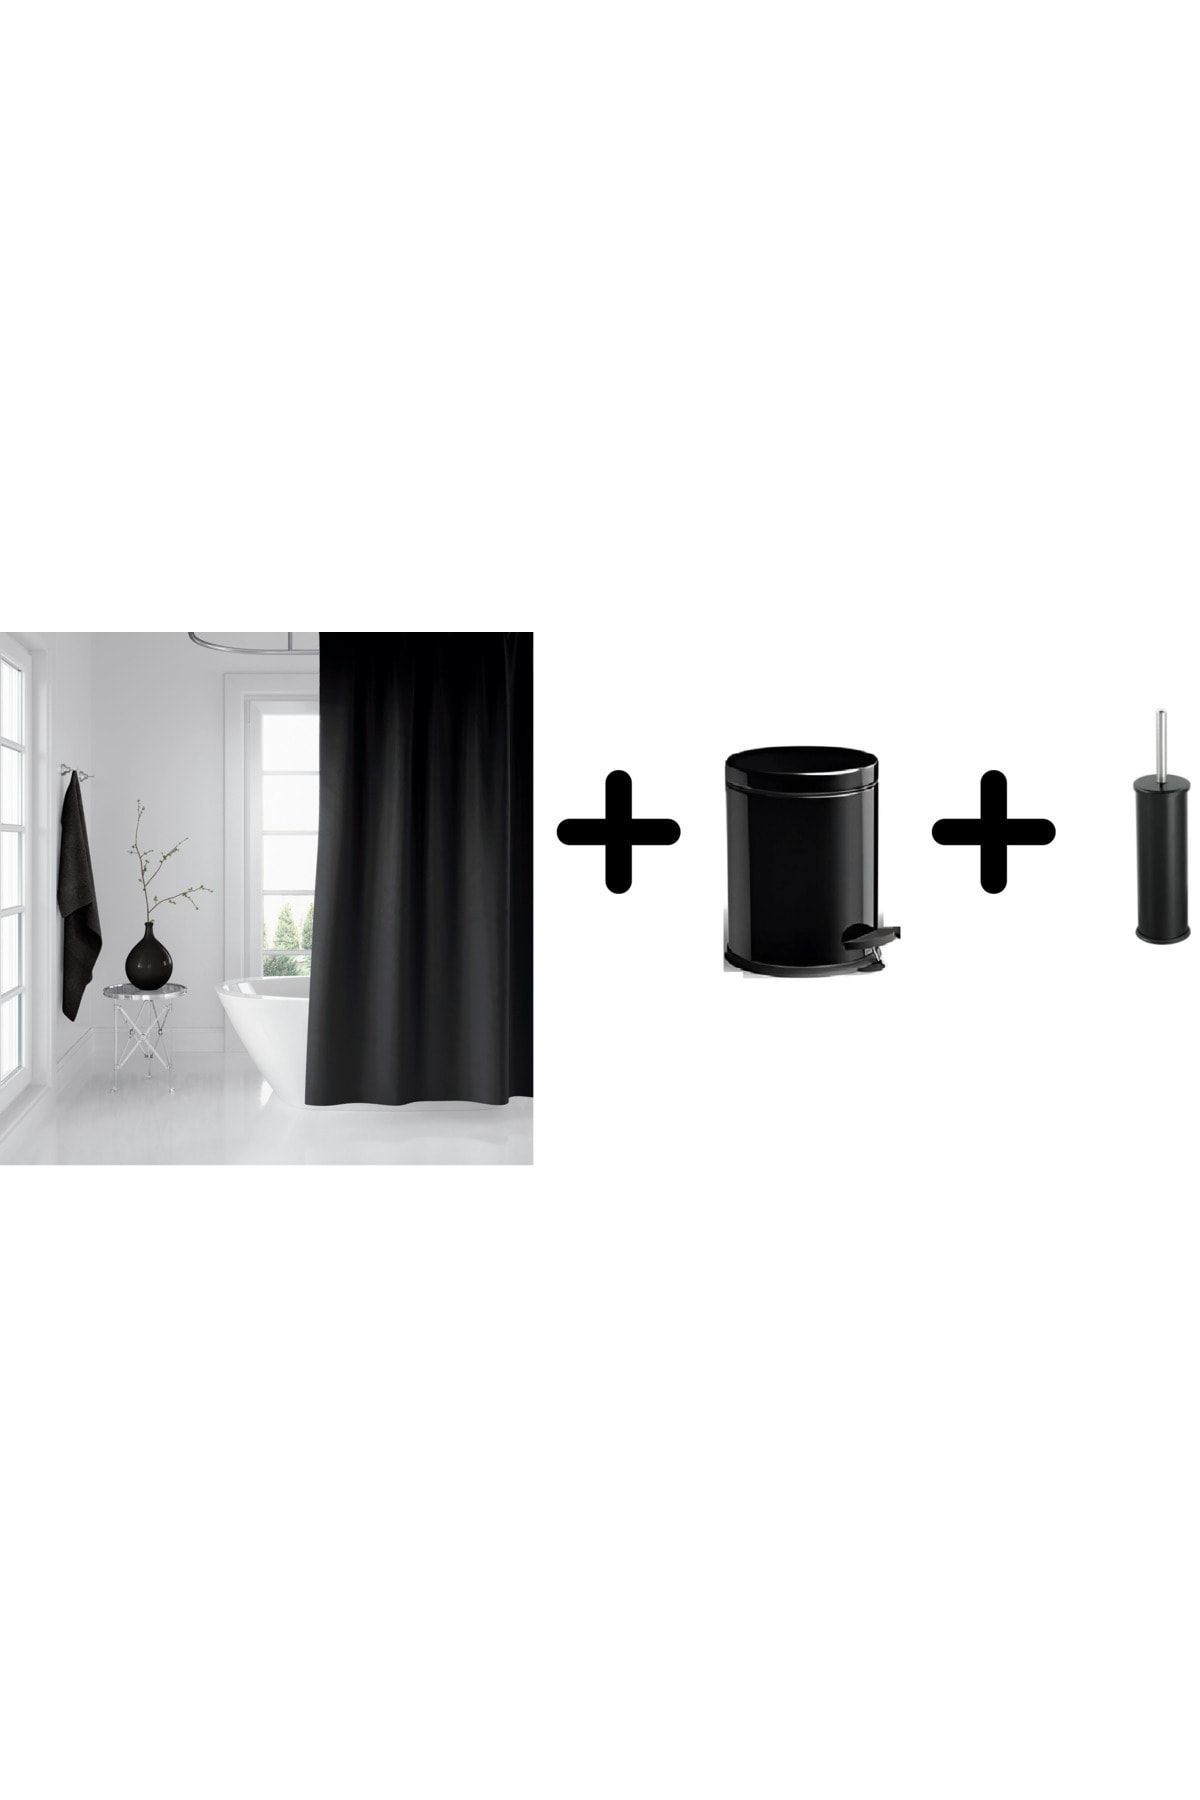 Zethome Banyo Duş Perdesi Siyah Çift Kanat Pedallı Çöp Kovası 5 Lt Ve Tuvalet Fırçası Set